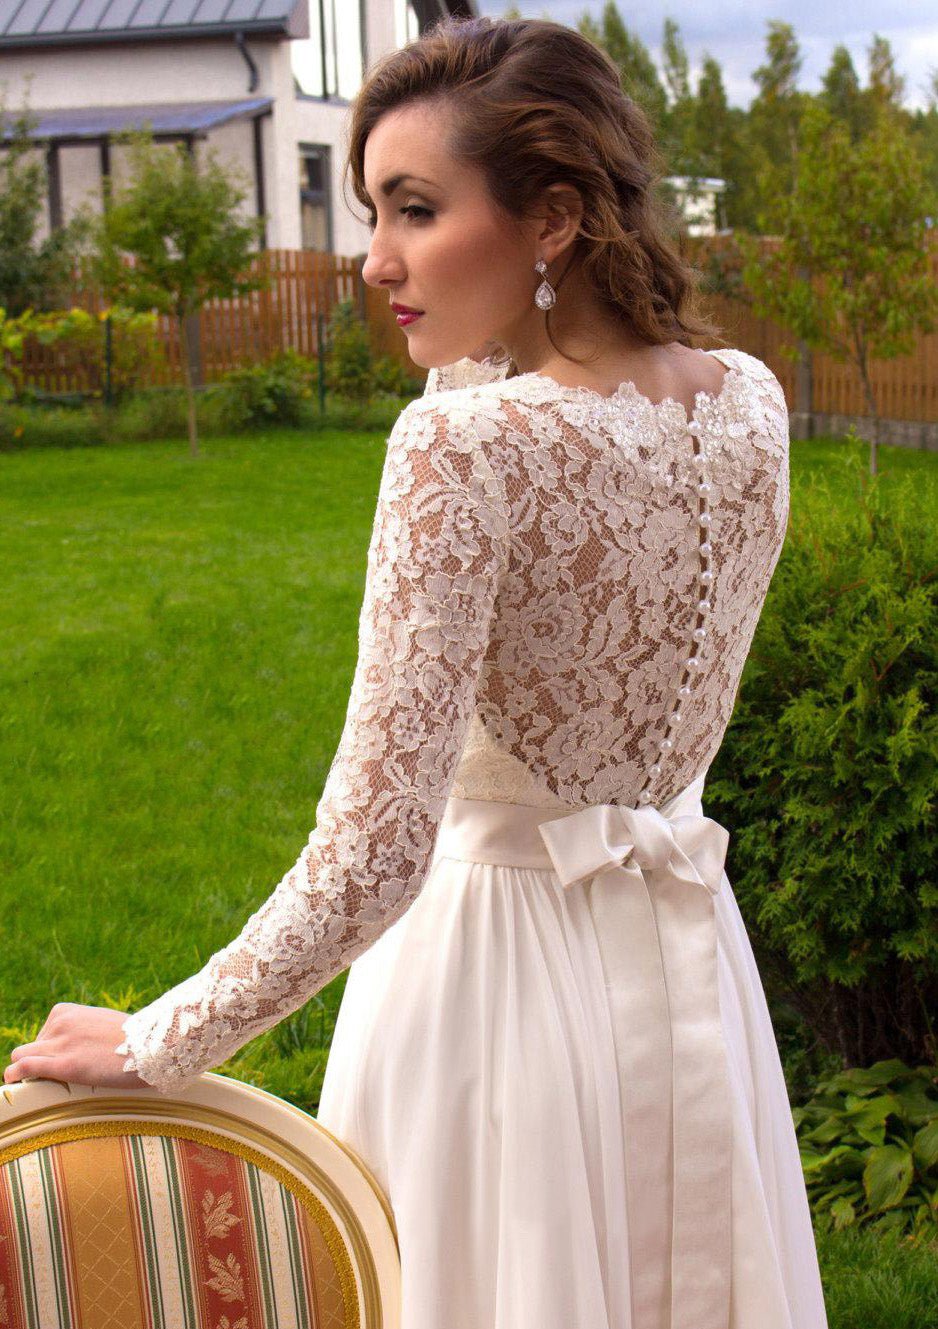 A-line/Princess Scalloped Neck Full/Long Sleeve Long/Floor-Length Chiffon Wedding Dress With Lace Sashes - dennisdresses